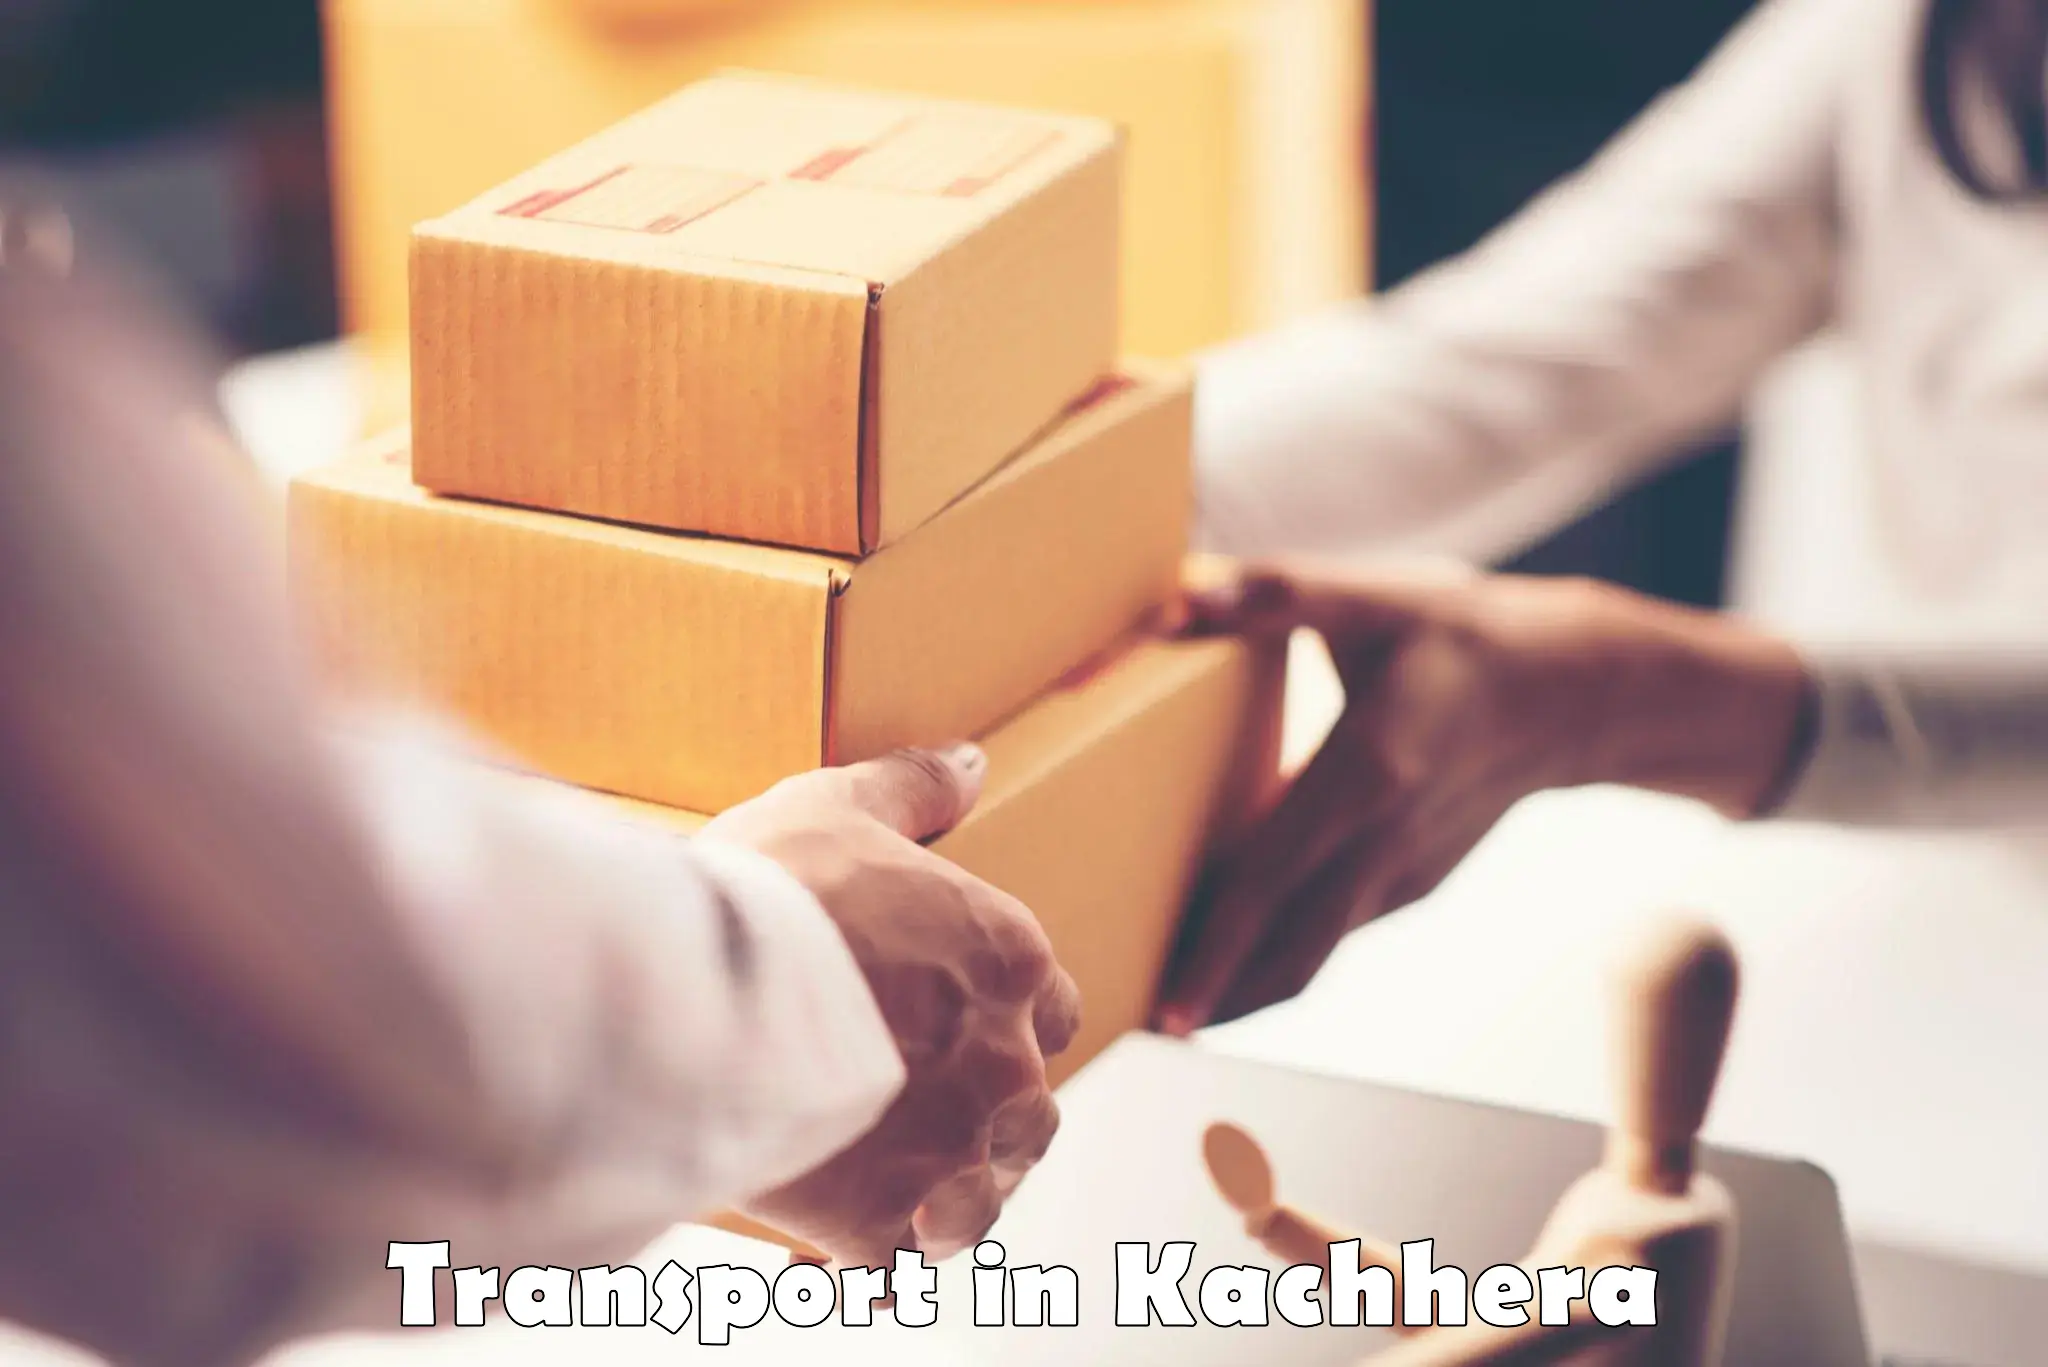 Transport in sharing in Kachhera